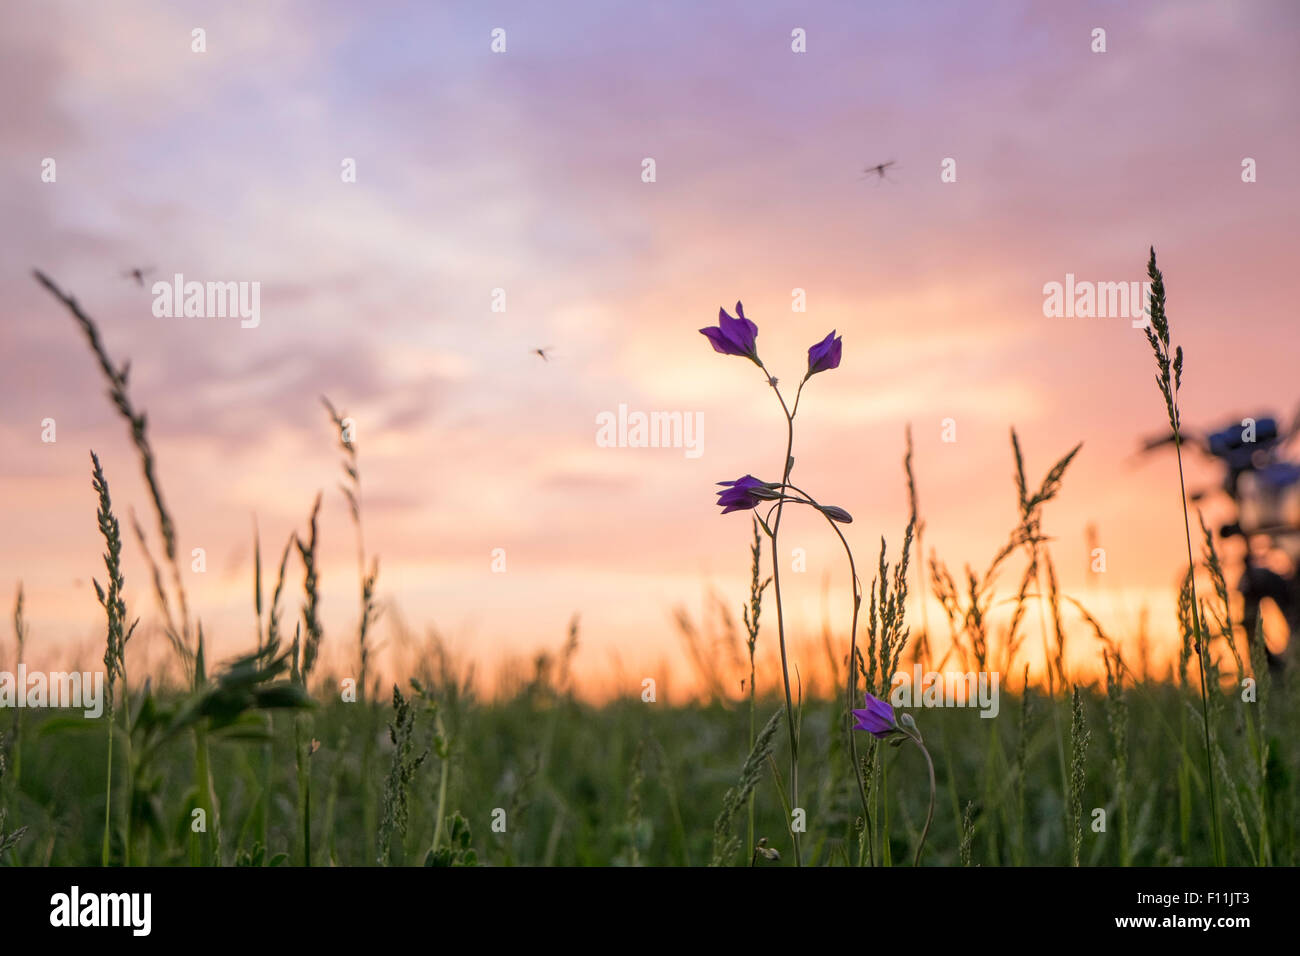 Wildflower Photo | Sunset Photo | Illinois Prairie | Sunset Photography |  Flower Photography | Flower Photograph | Sunset Photograph | Digital